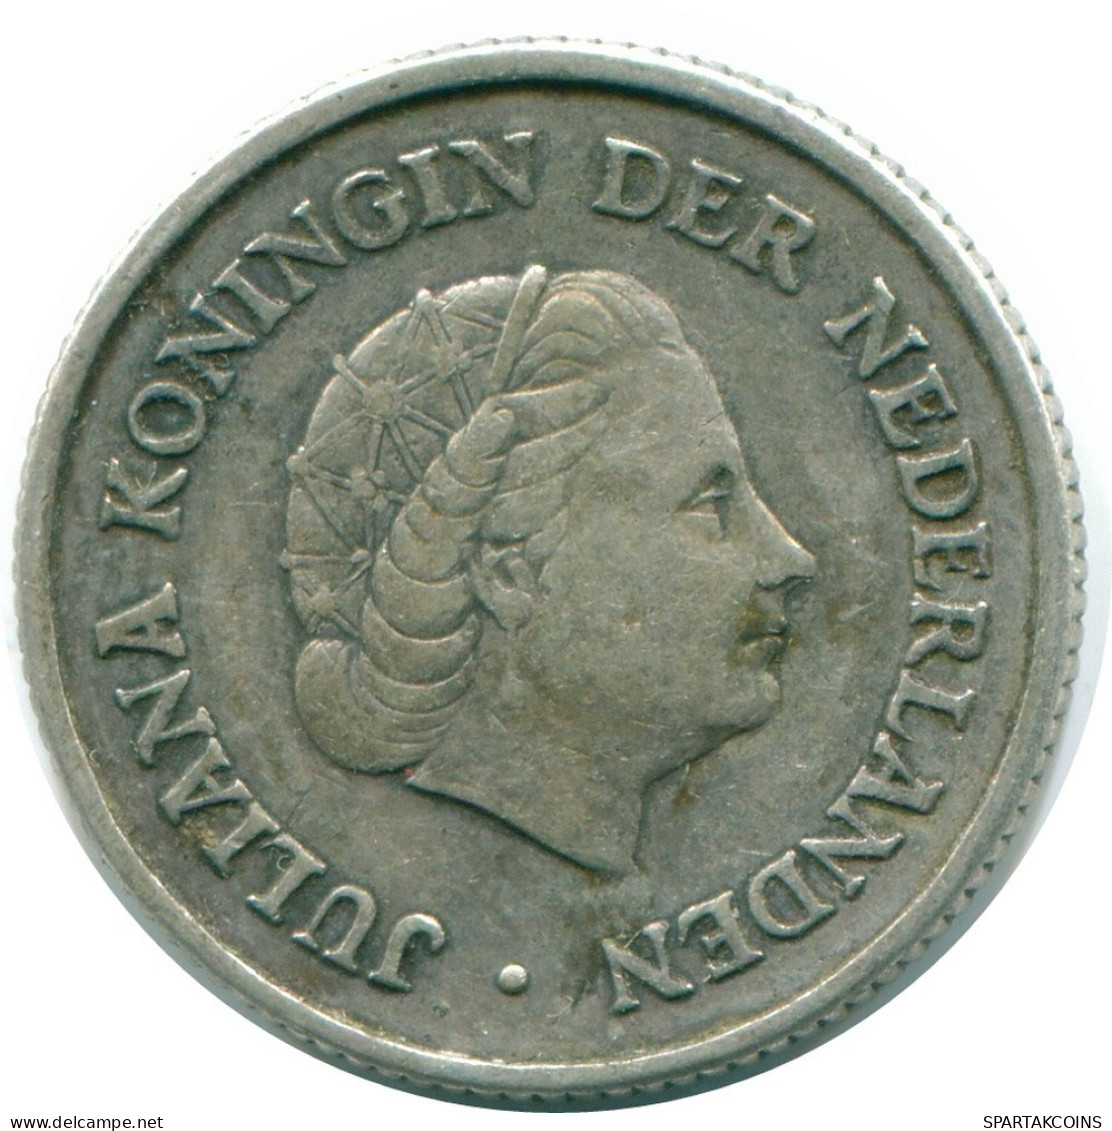 1/4 GULDEN 1963 NETHERLANDS ANTILLES SILVER Colonial Coin #NL11229.4.U.A - Netherlands Antilles